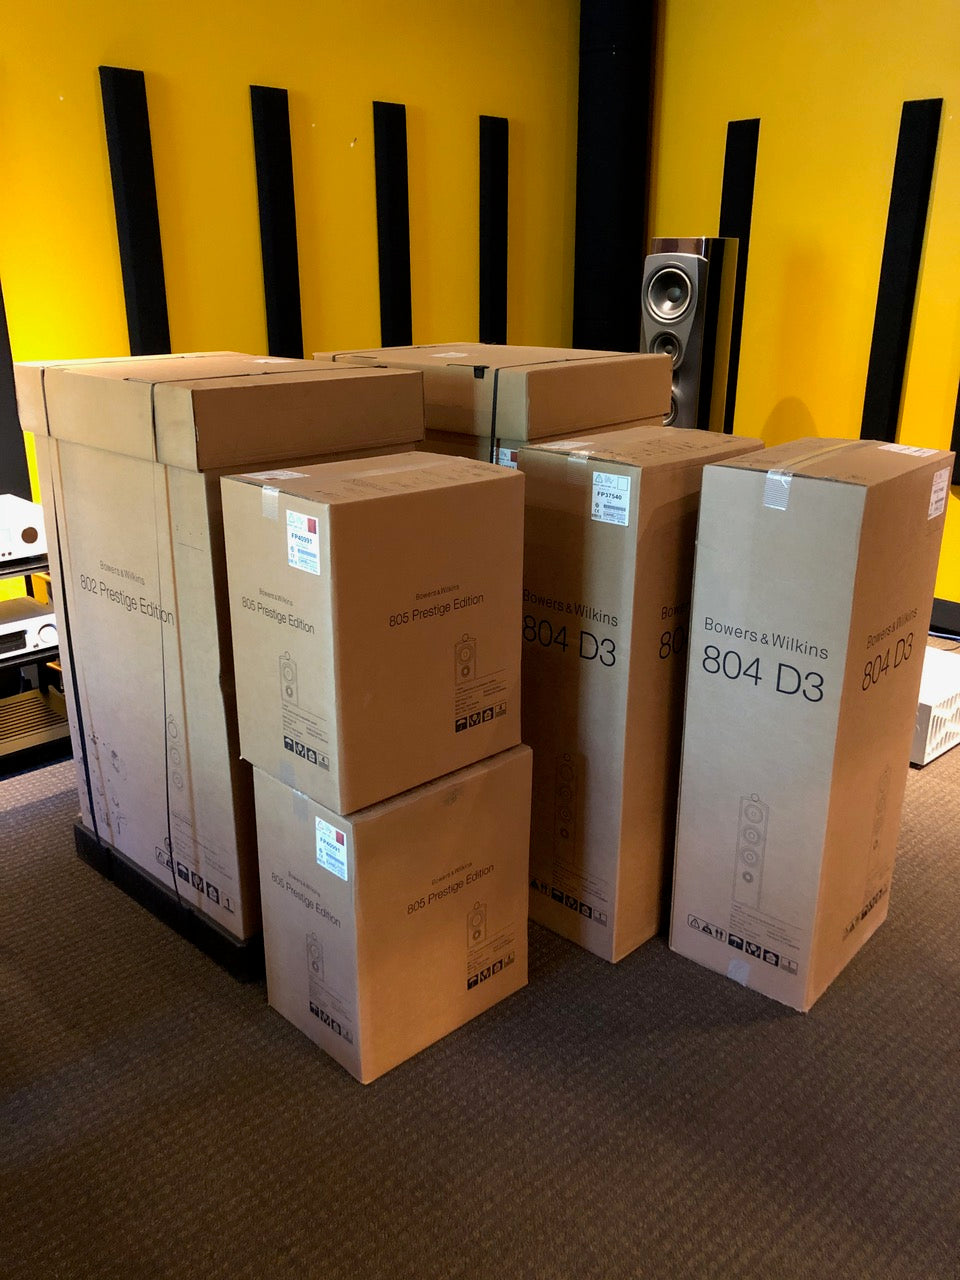 The Bowers & Wilkins 800 series speakers have landed!